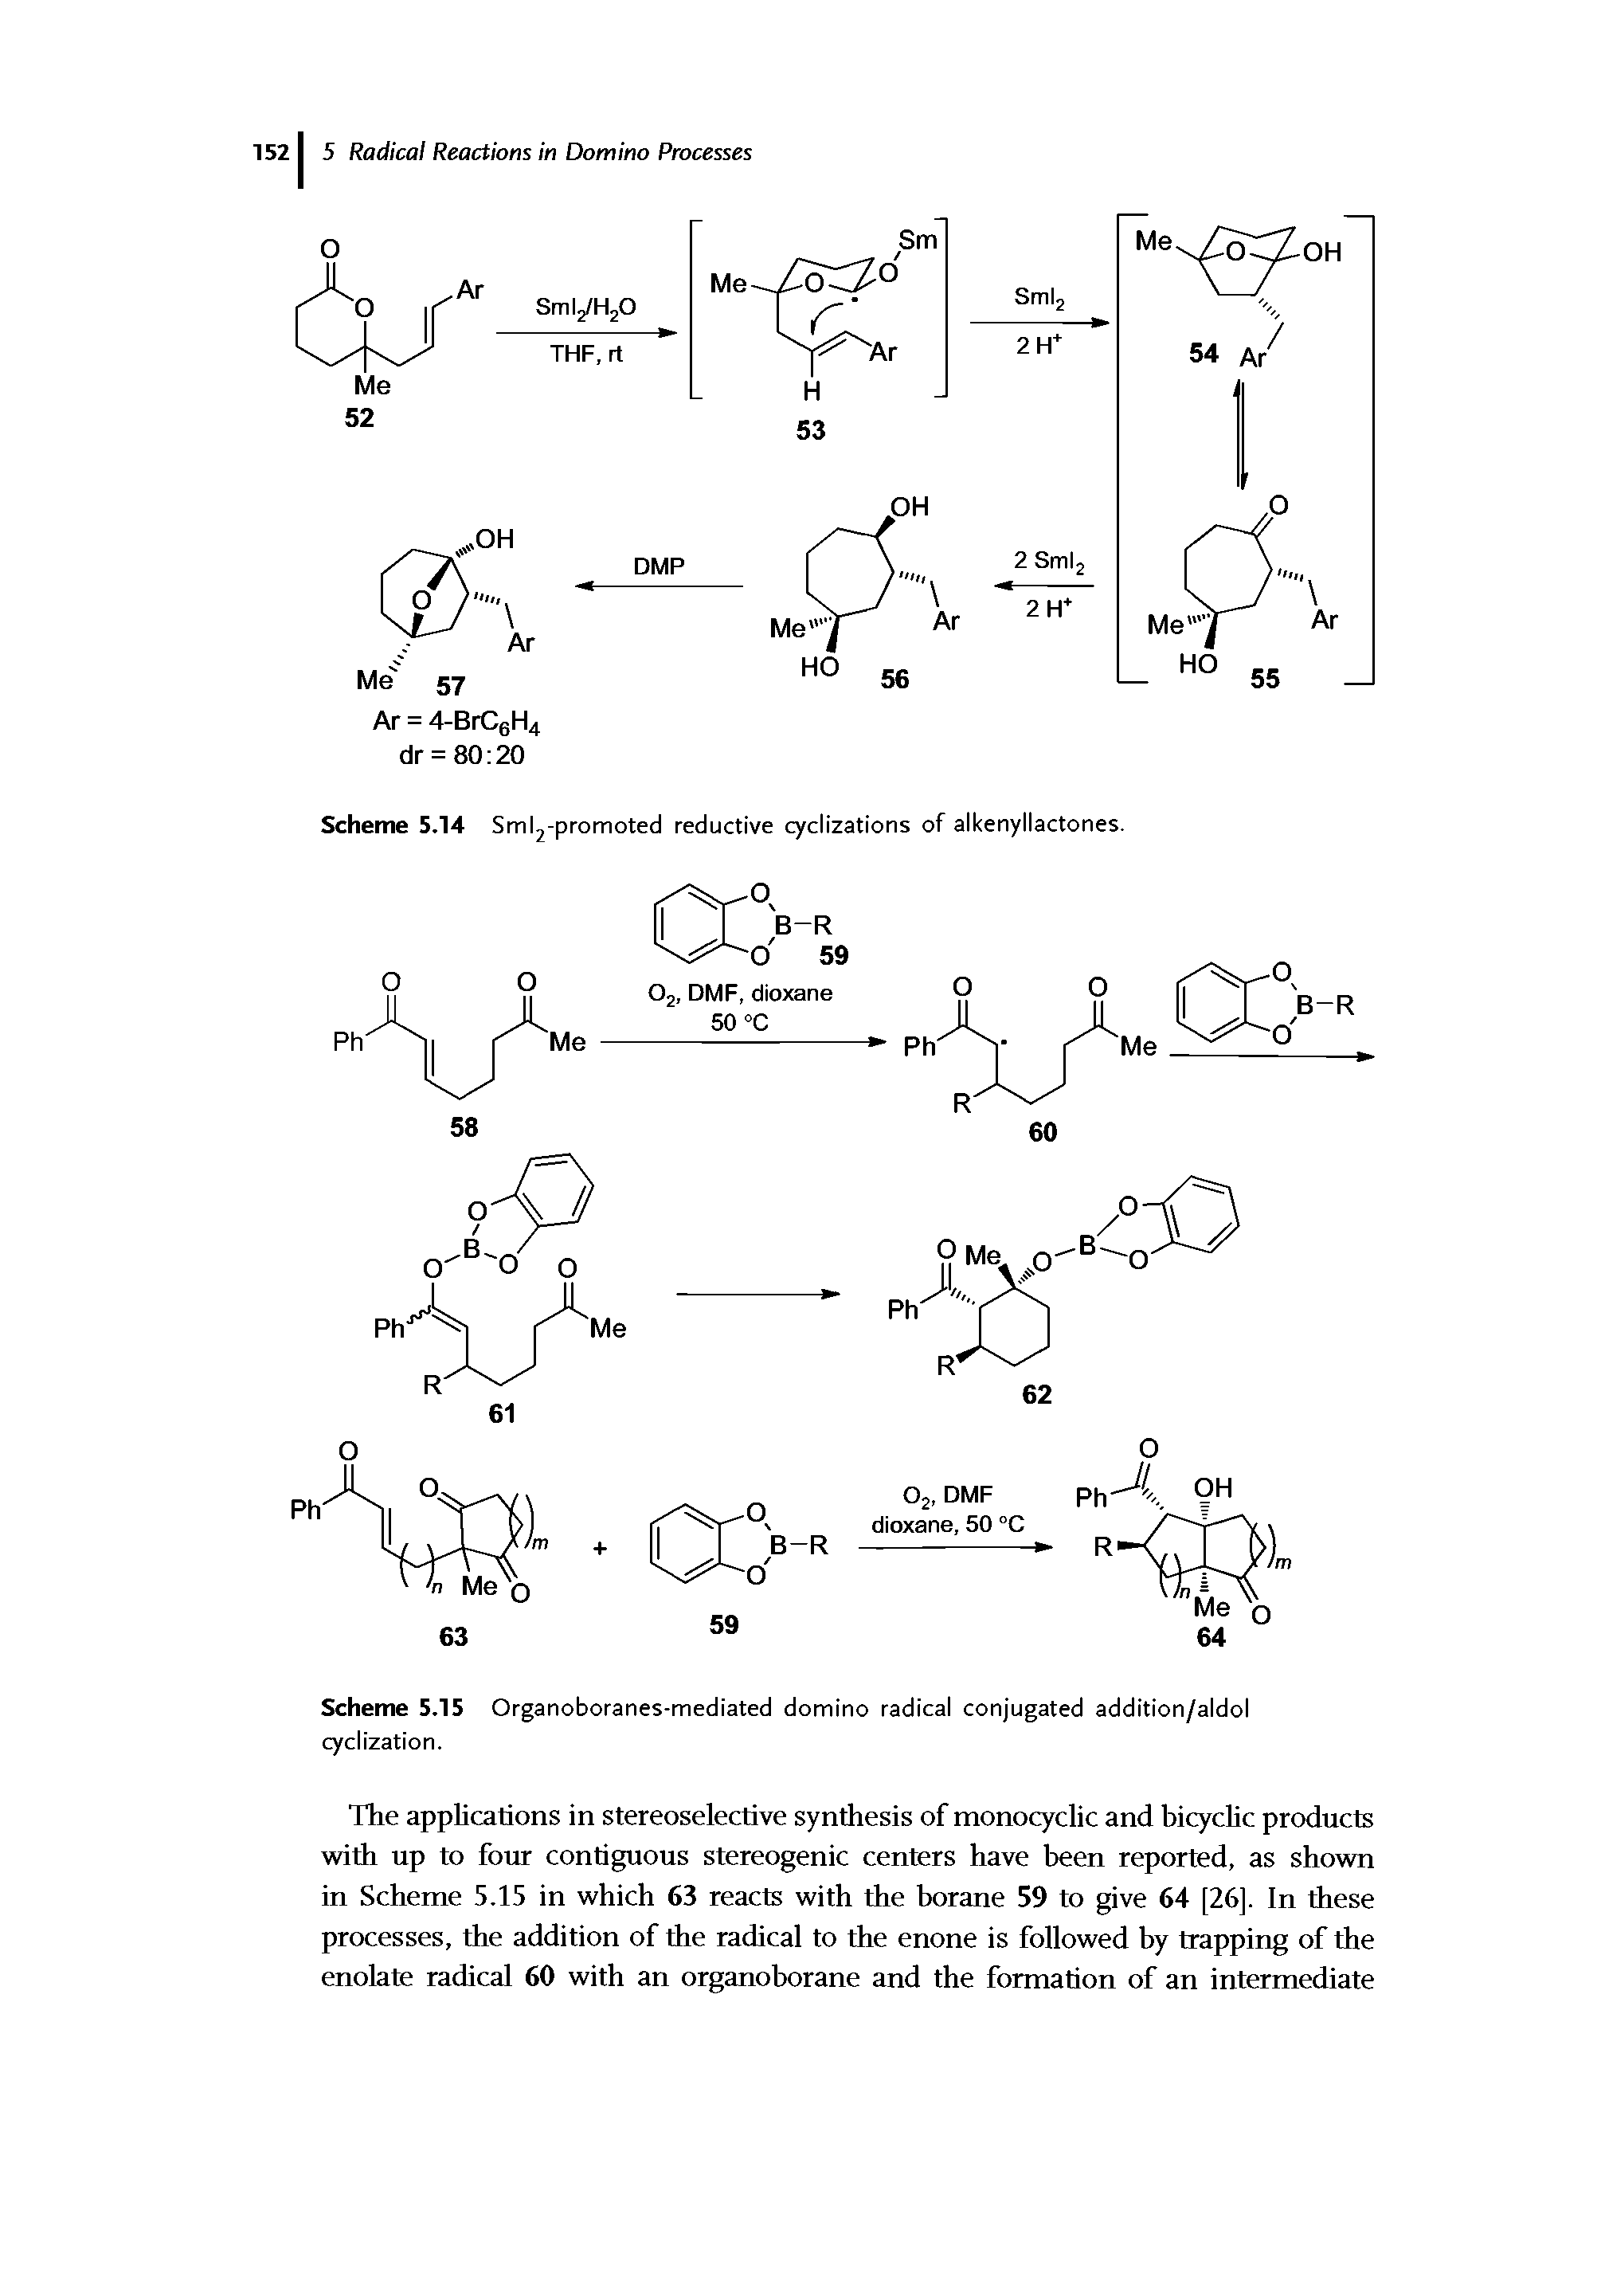 Scheme 5.15 Organoboranes-mediated domino radical conjugated addition/aldol cyclization.